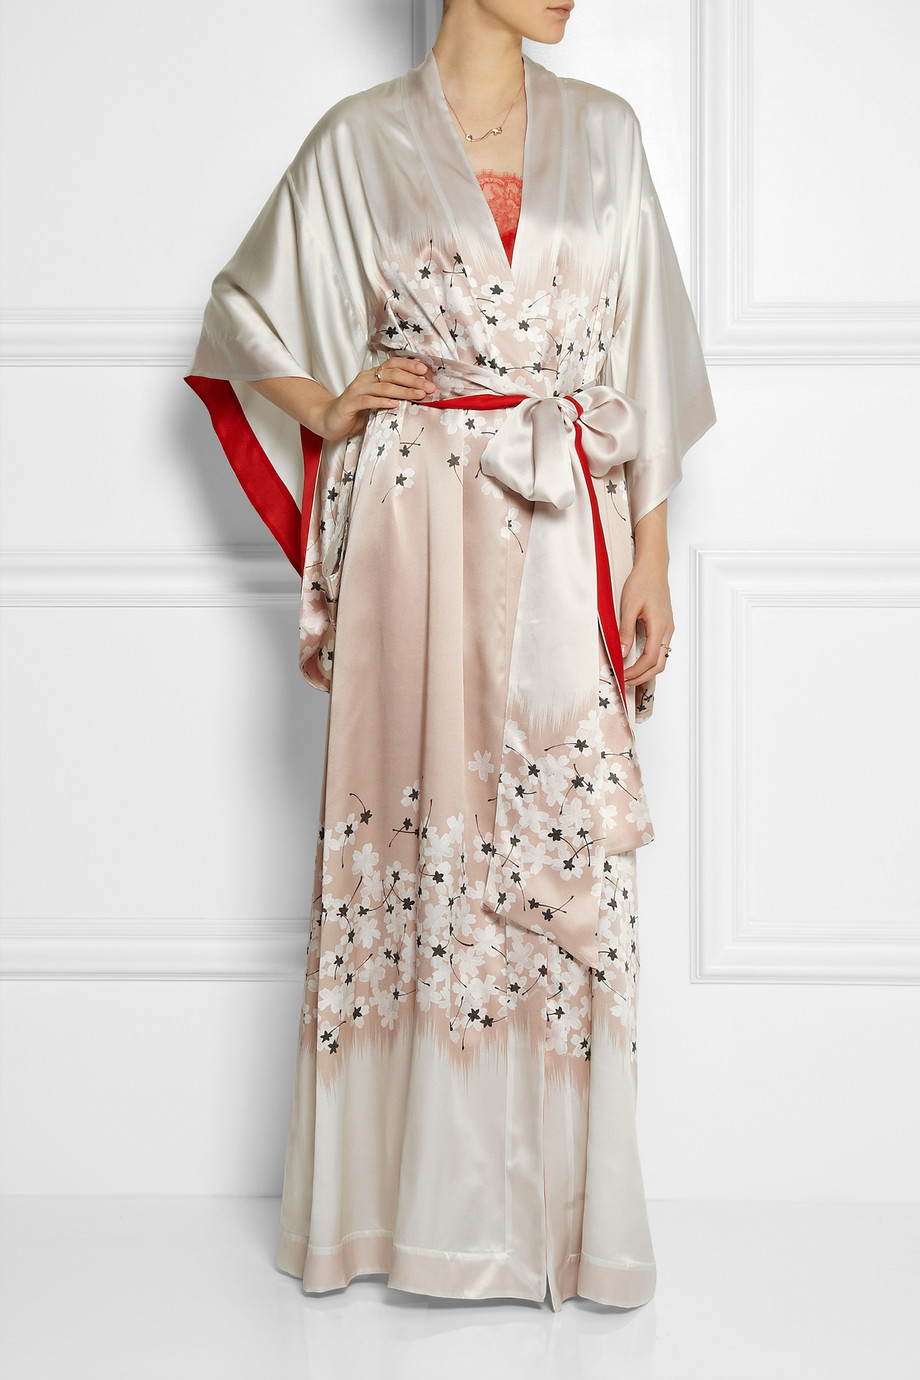 Lyst - Carine Gilson Sakura Floral-print Silk-satin Kimono Robe in Natural